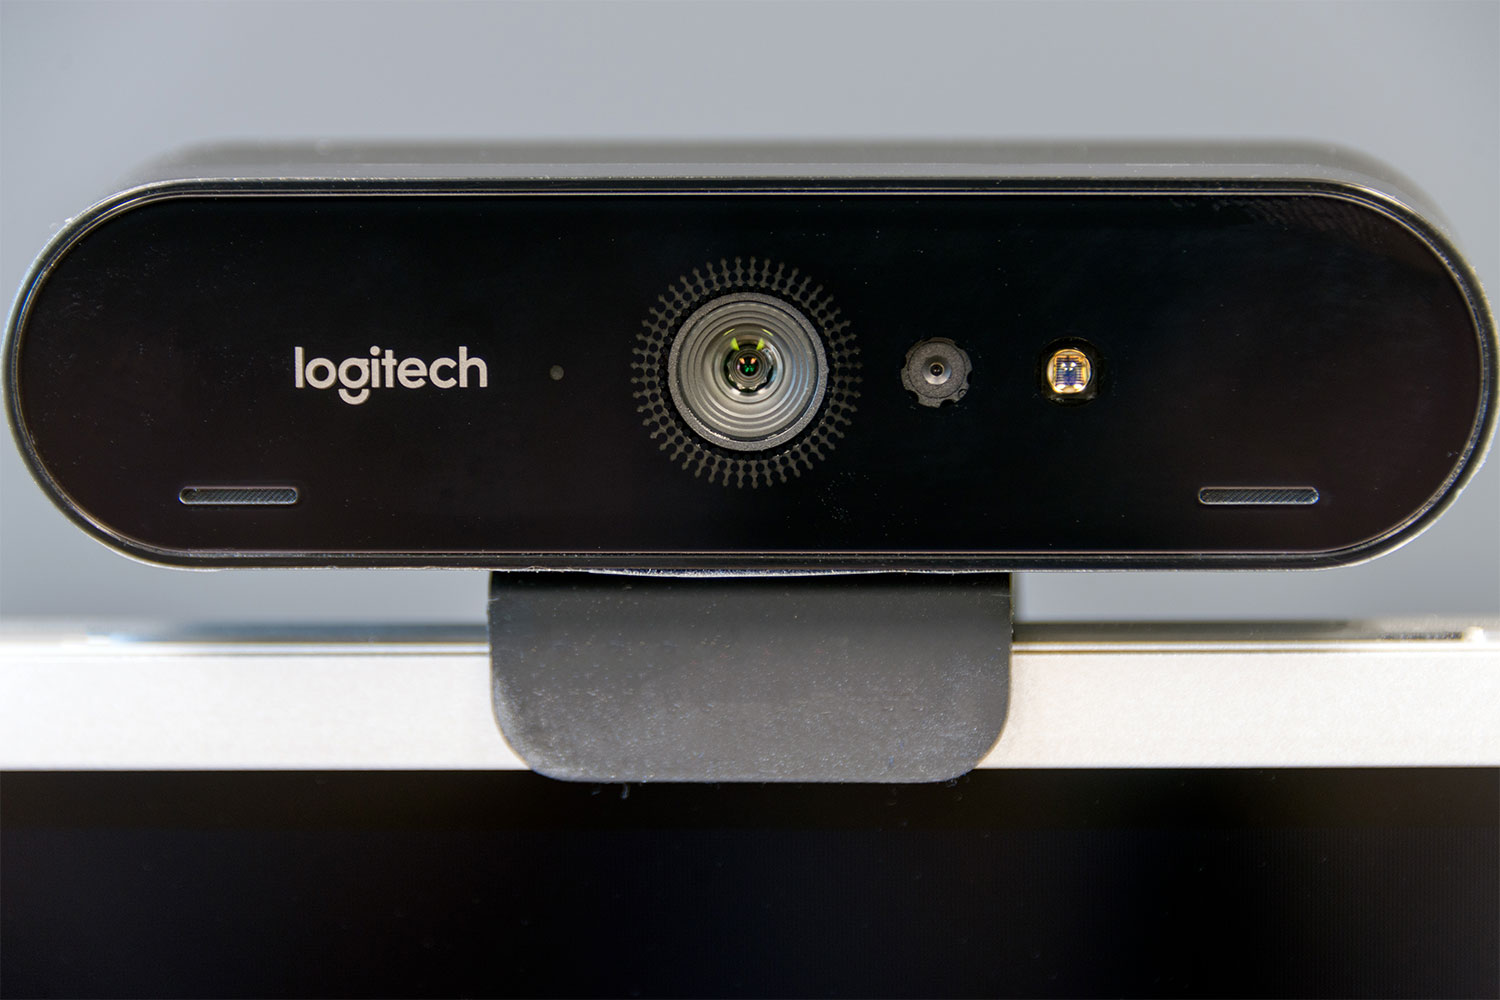 Logitech Brio 4K Webcam Overview